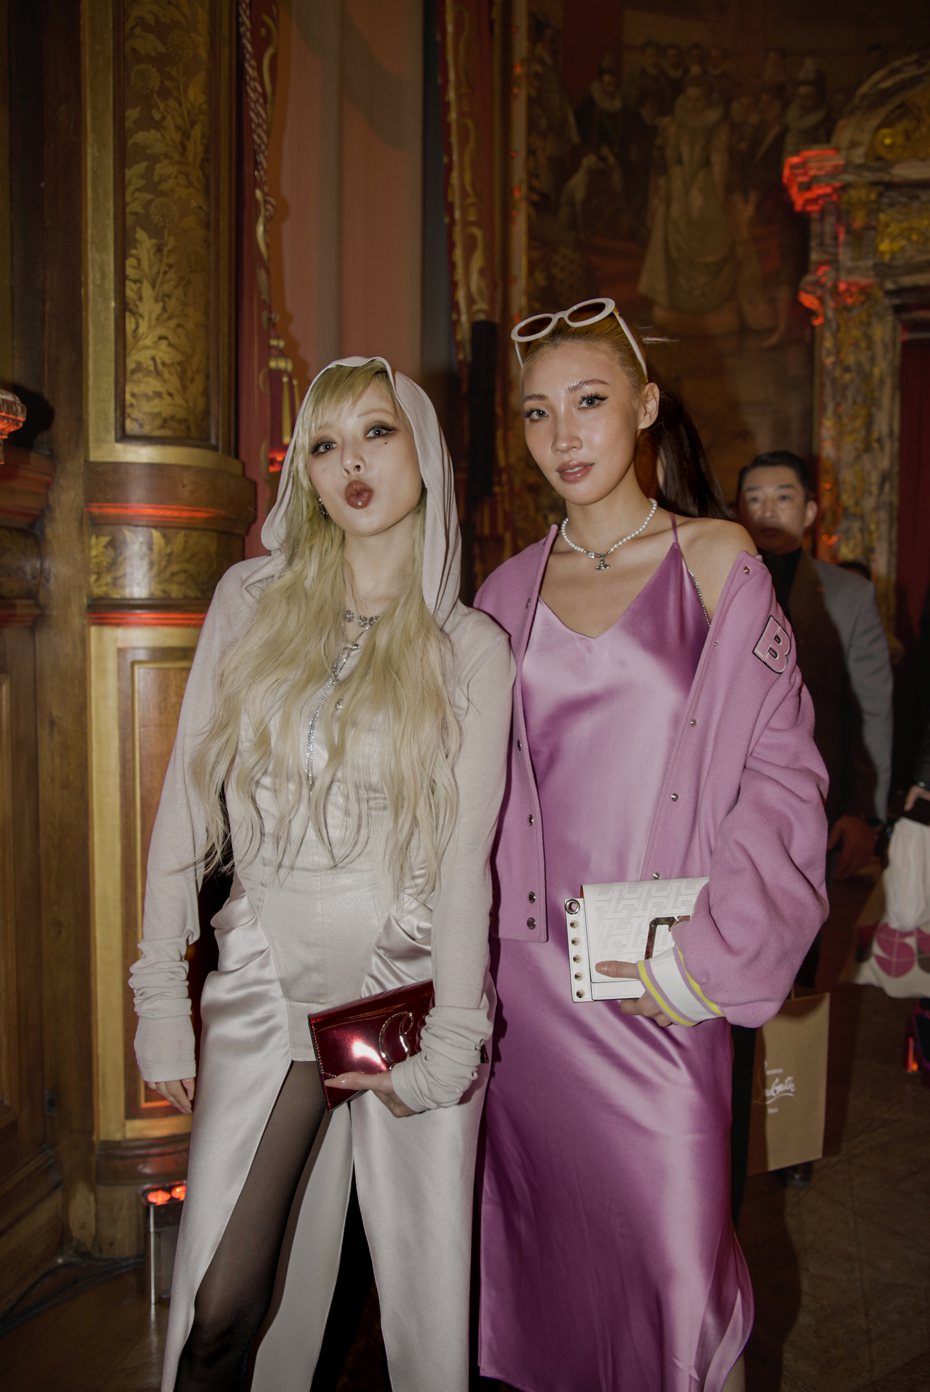 Karencici（右）在巴黎時裝周活動上遇到泫雅，開心合影。圖／華研國際提供